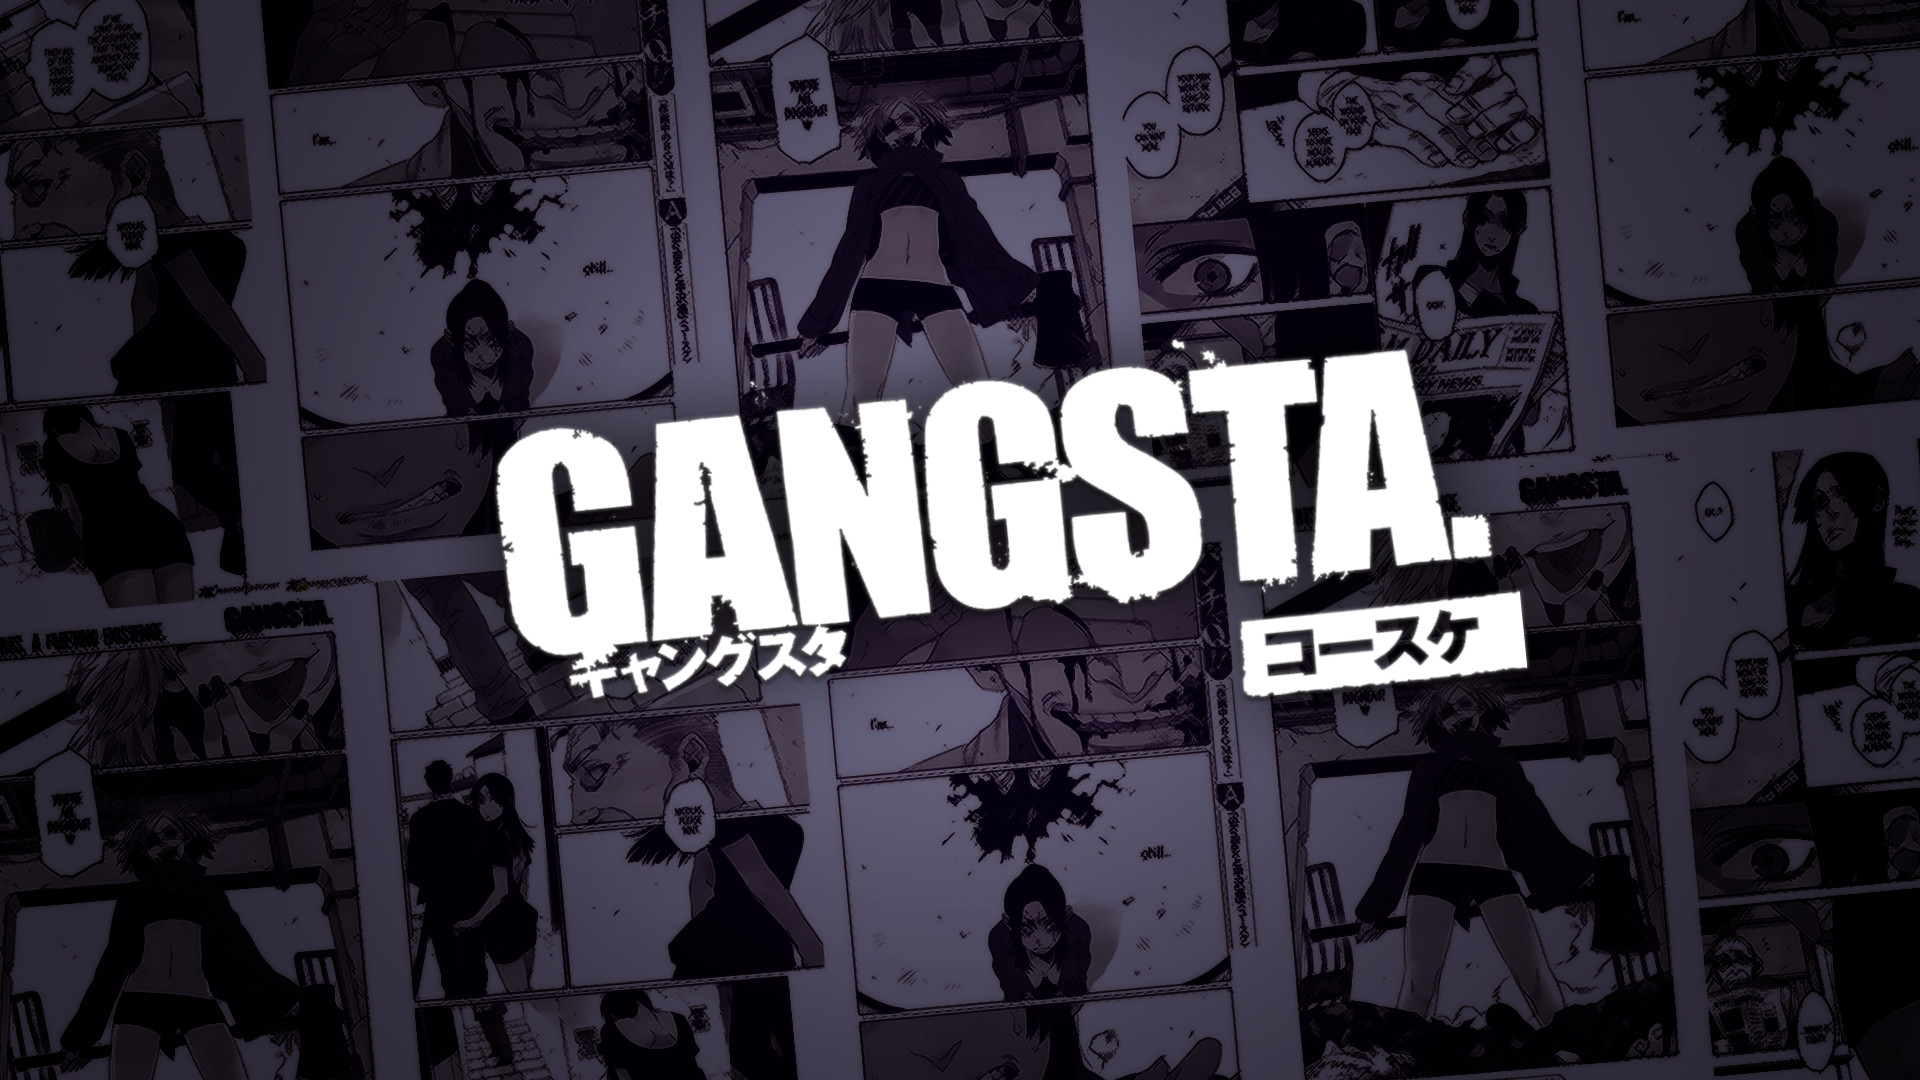 Gangsta phone wallpaper 1080P 2k 4k Full HD Wallpapers Backgrounds  Free Download  Wallpaper Crafter